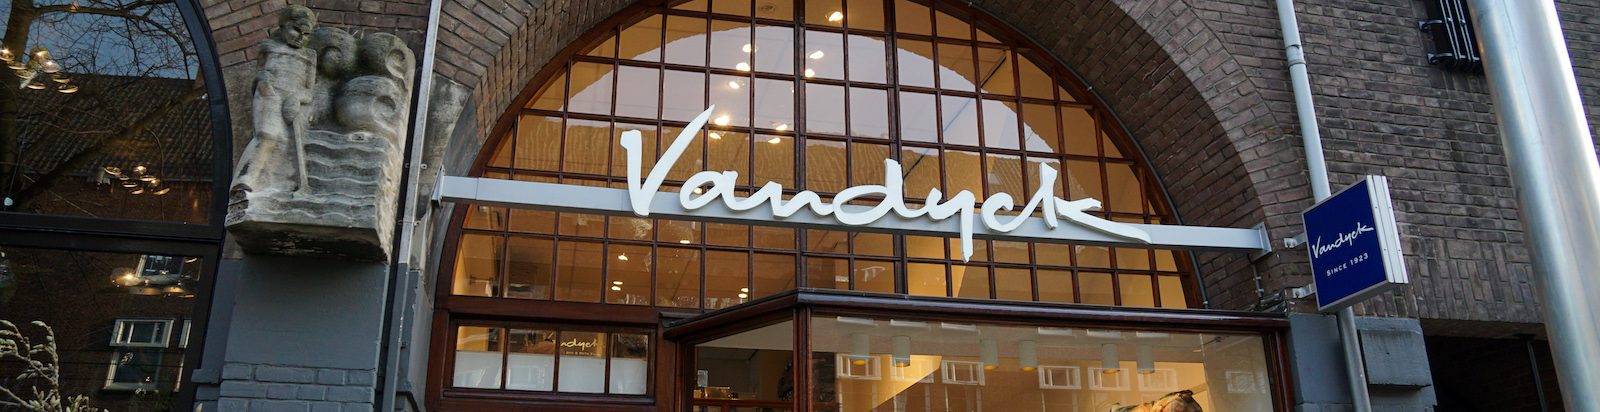 Vandyck Experience Store